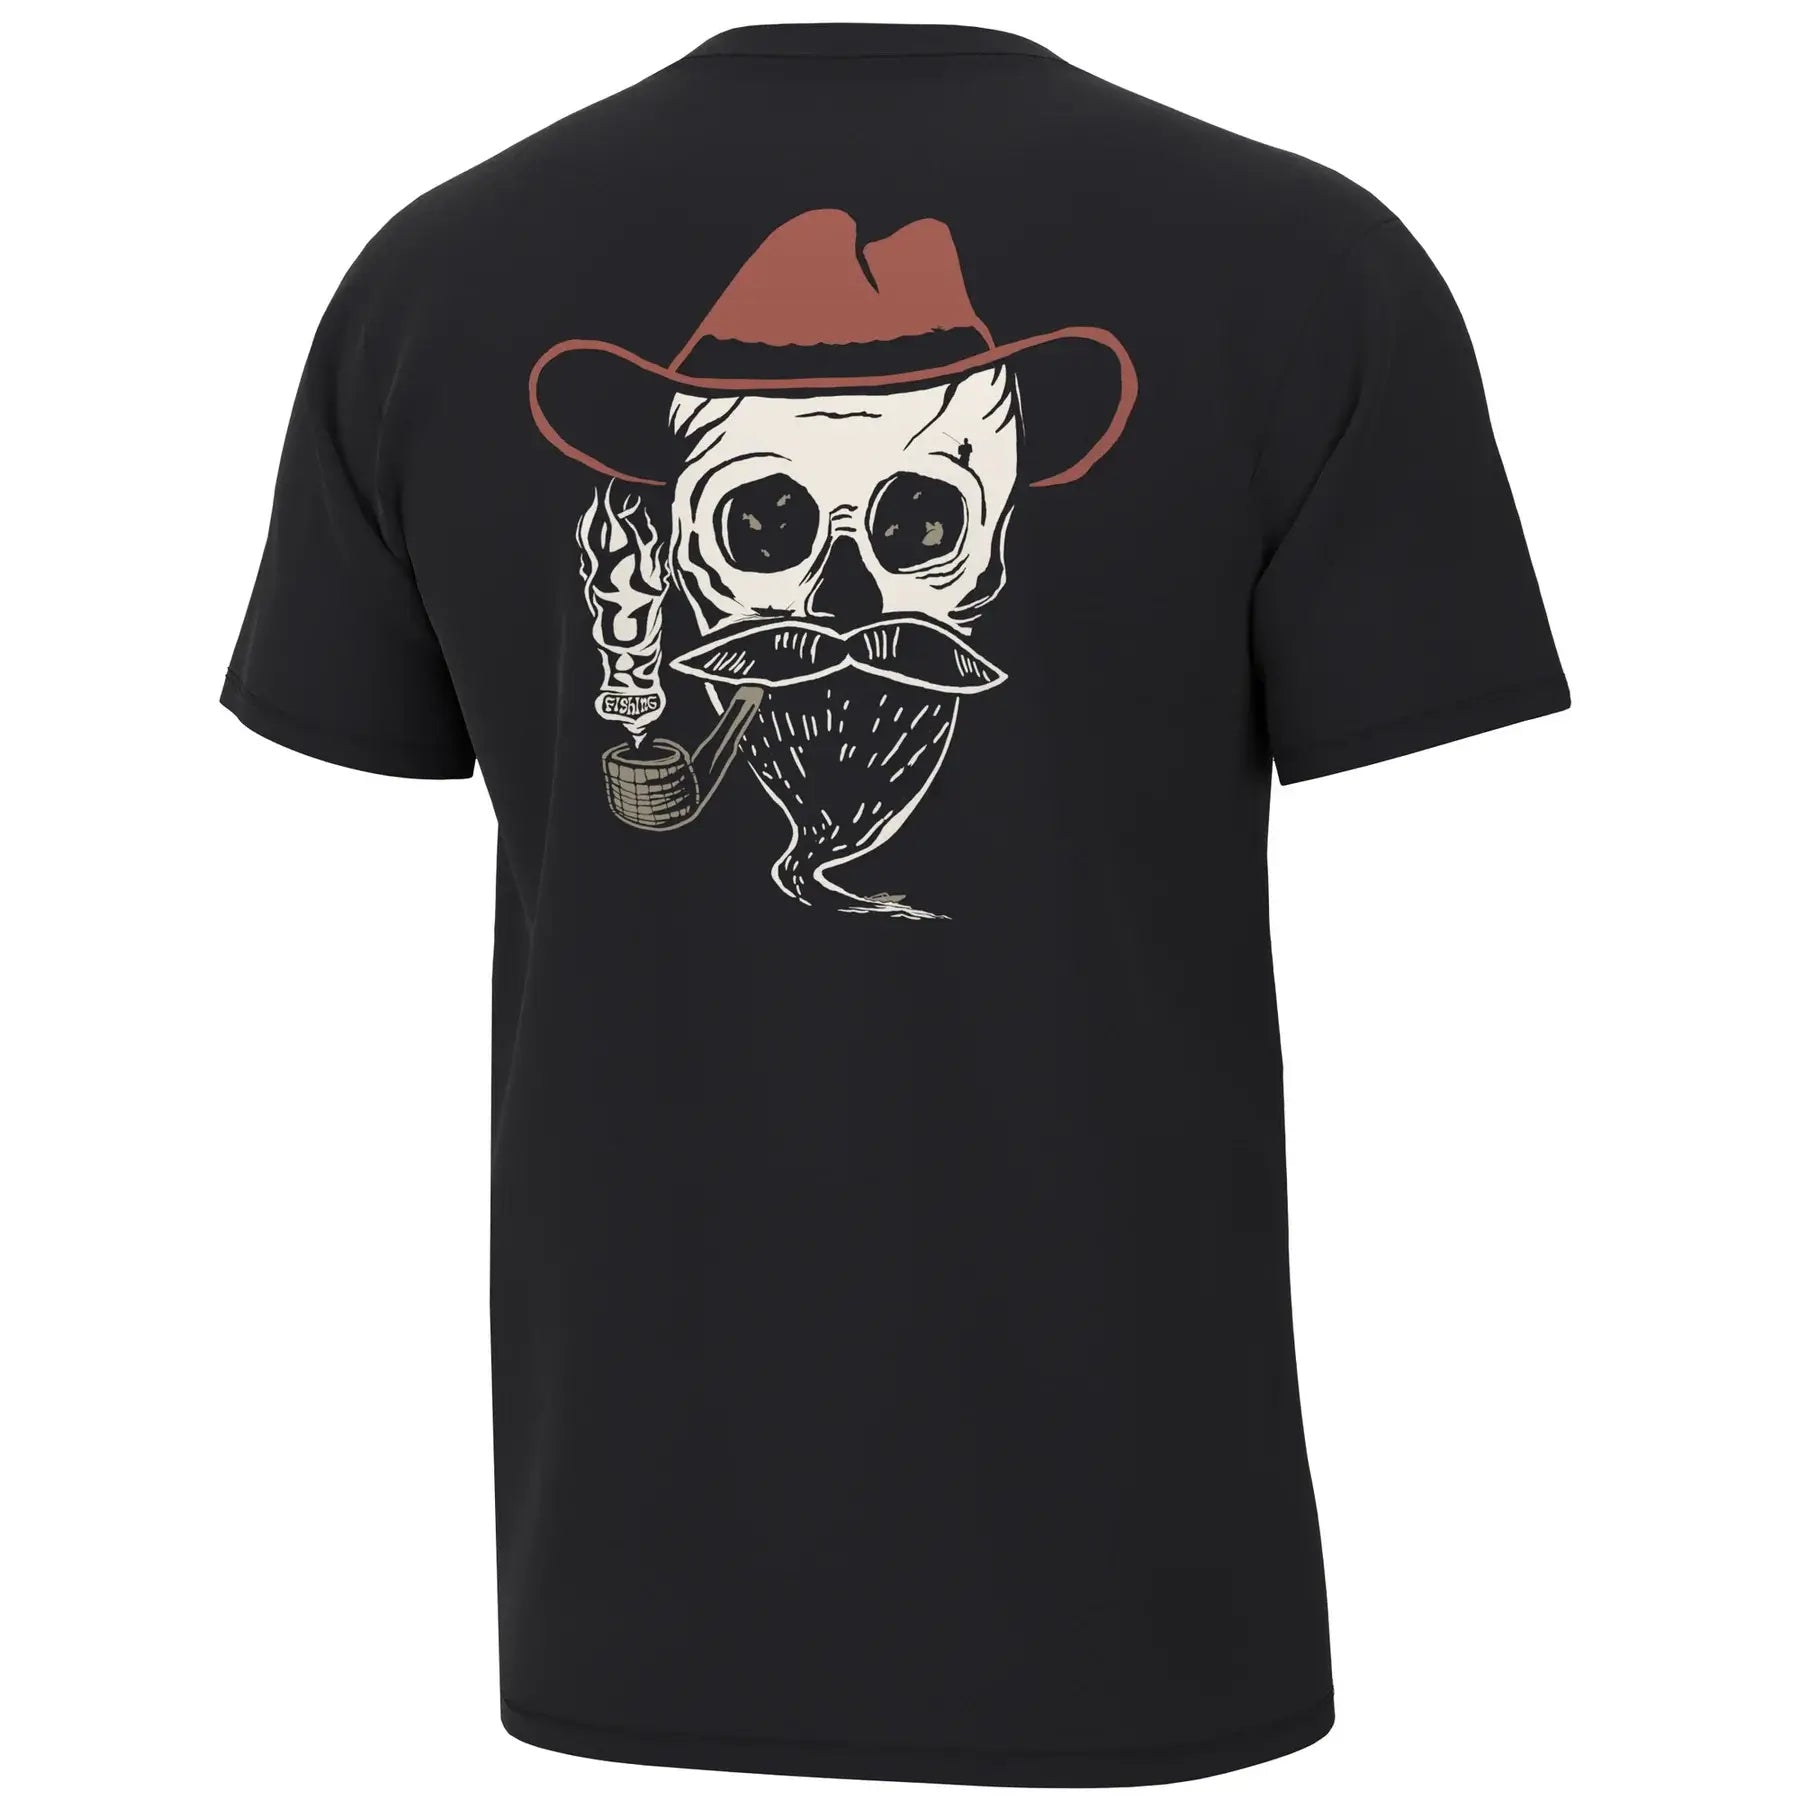 Huk Men's Rodeo Skull T-Shirt, Small, Black